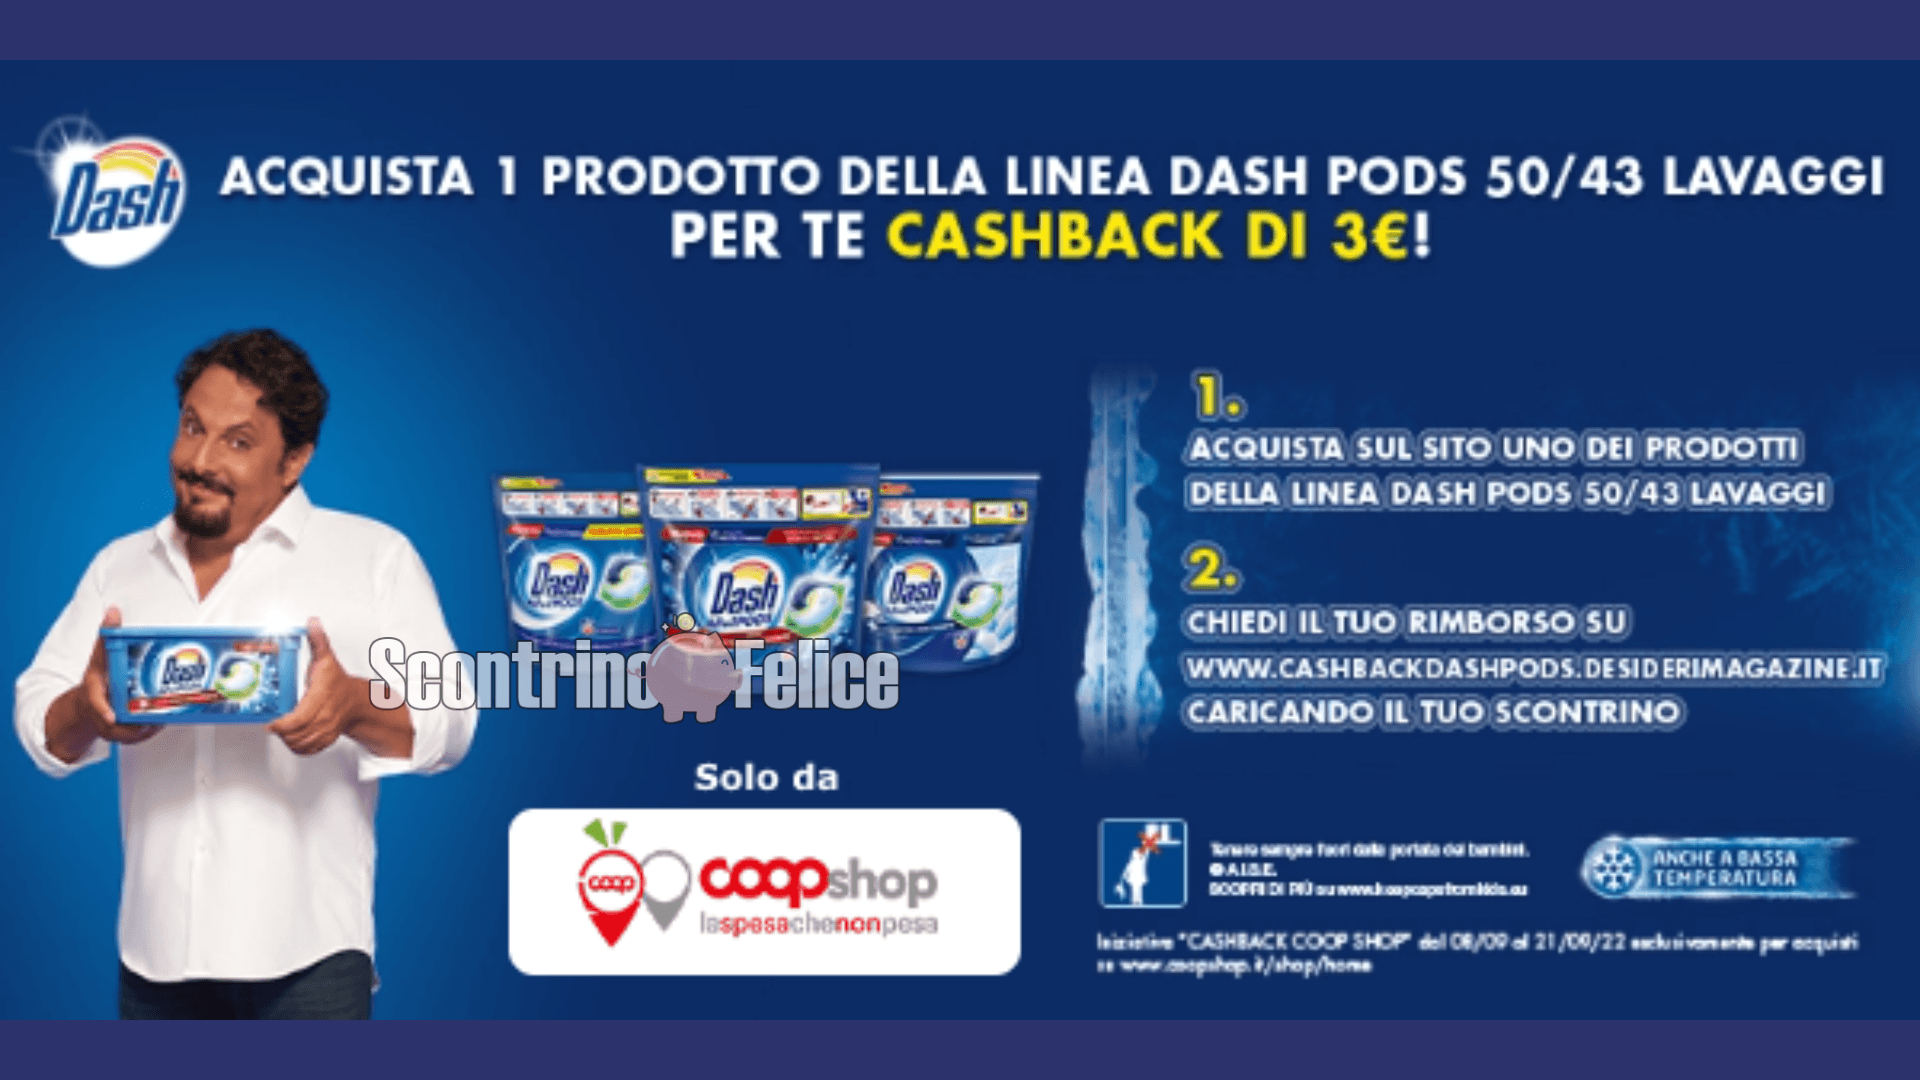 Cashback Dash Pods online su Coop Shop: ricevi un rimborso di 3 euro 53